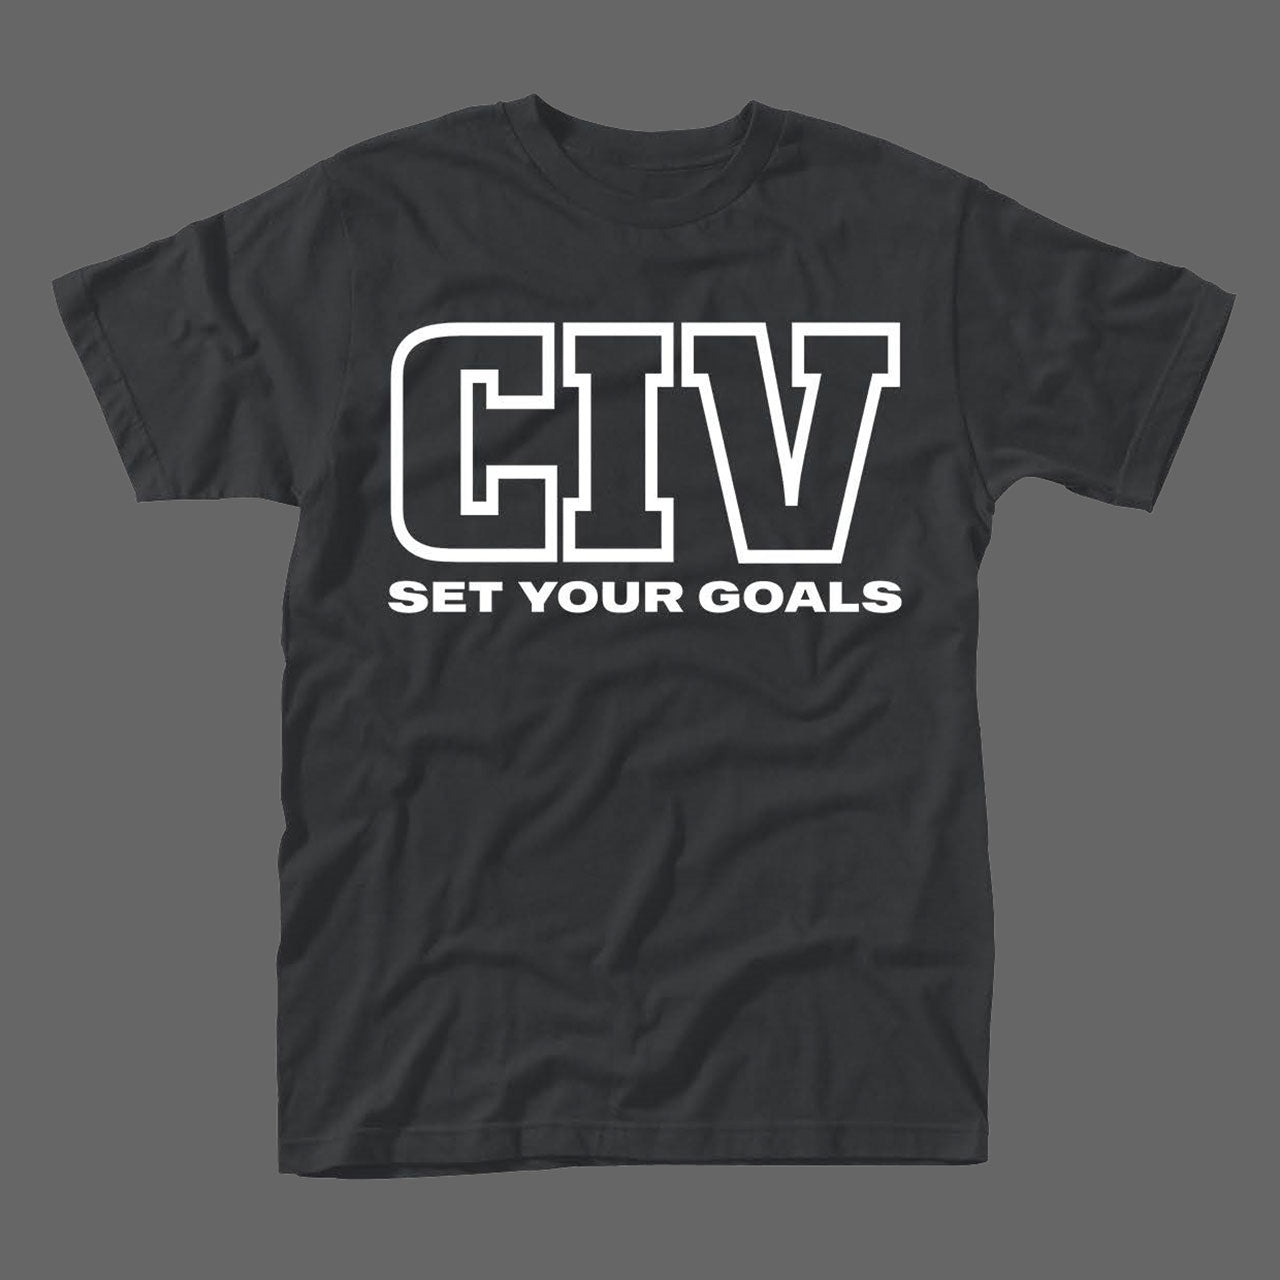 CIV - Set Your Goals (T-Shirt)